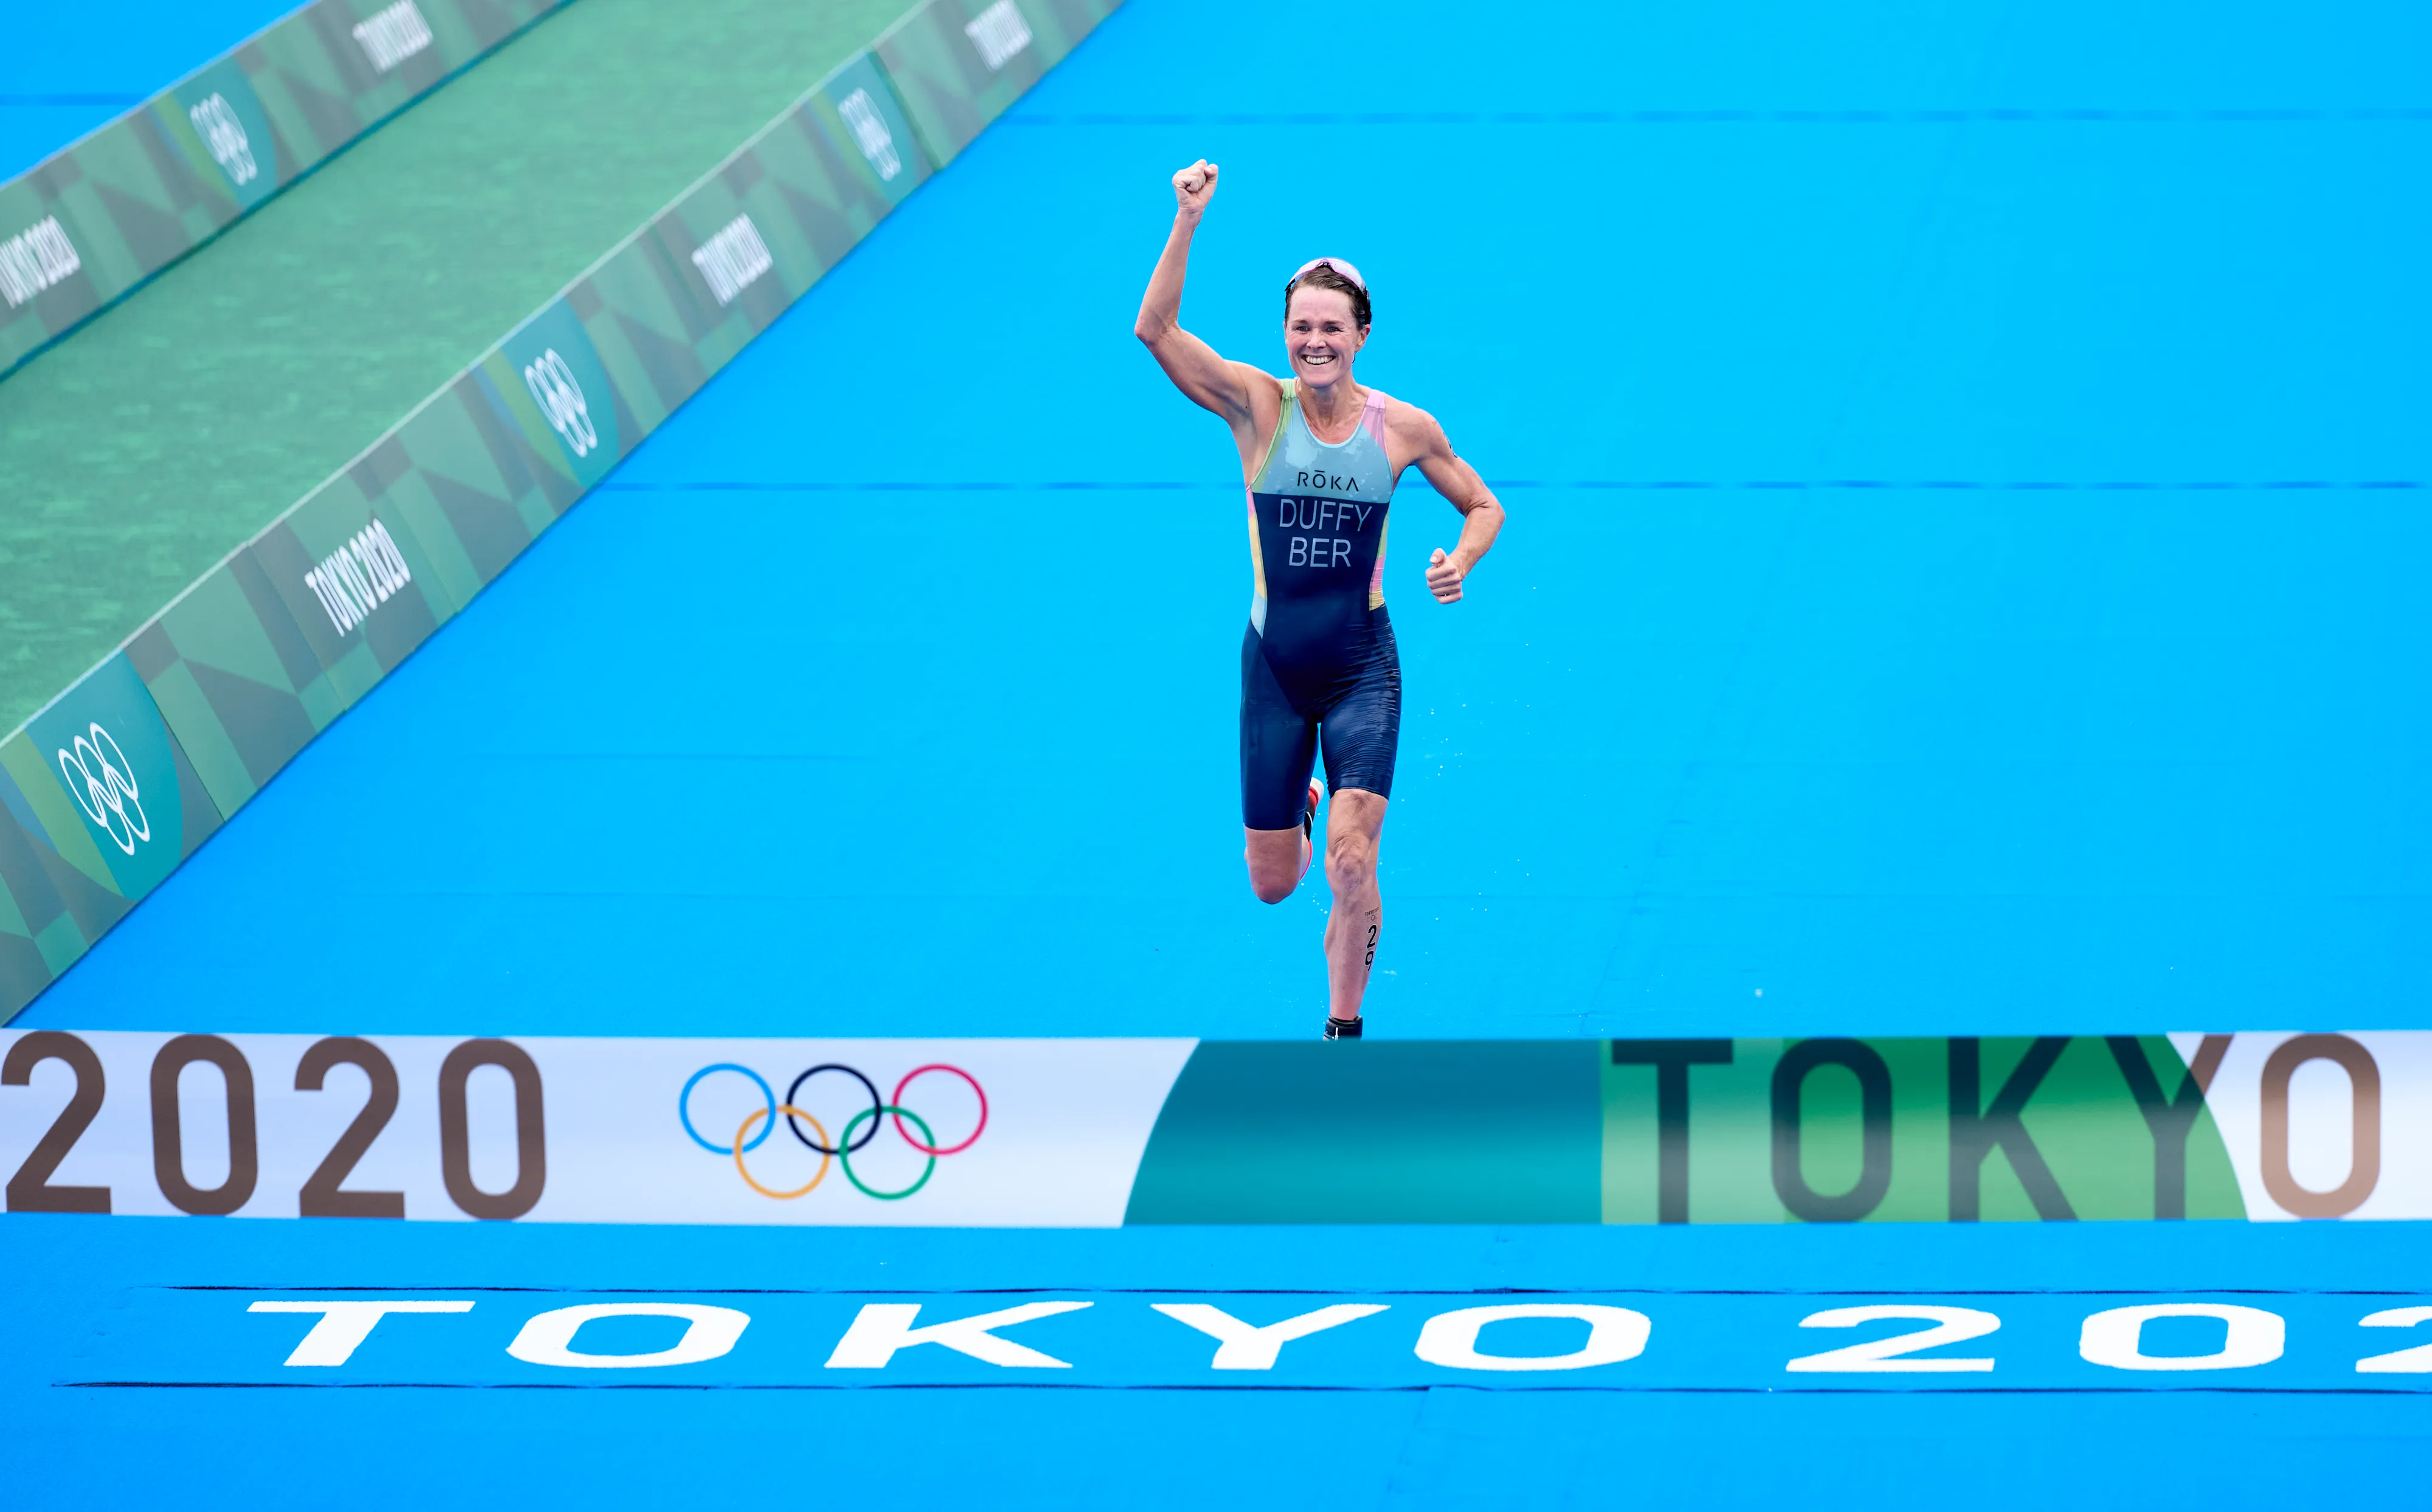 Bermuda triathlete Flora Duffy winning the 2020 Tokyo Olympic women's triathlon